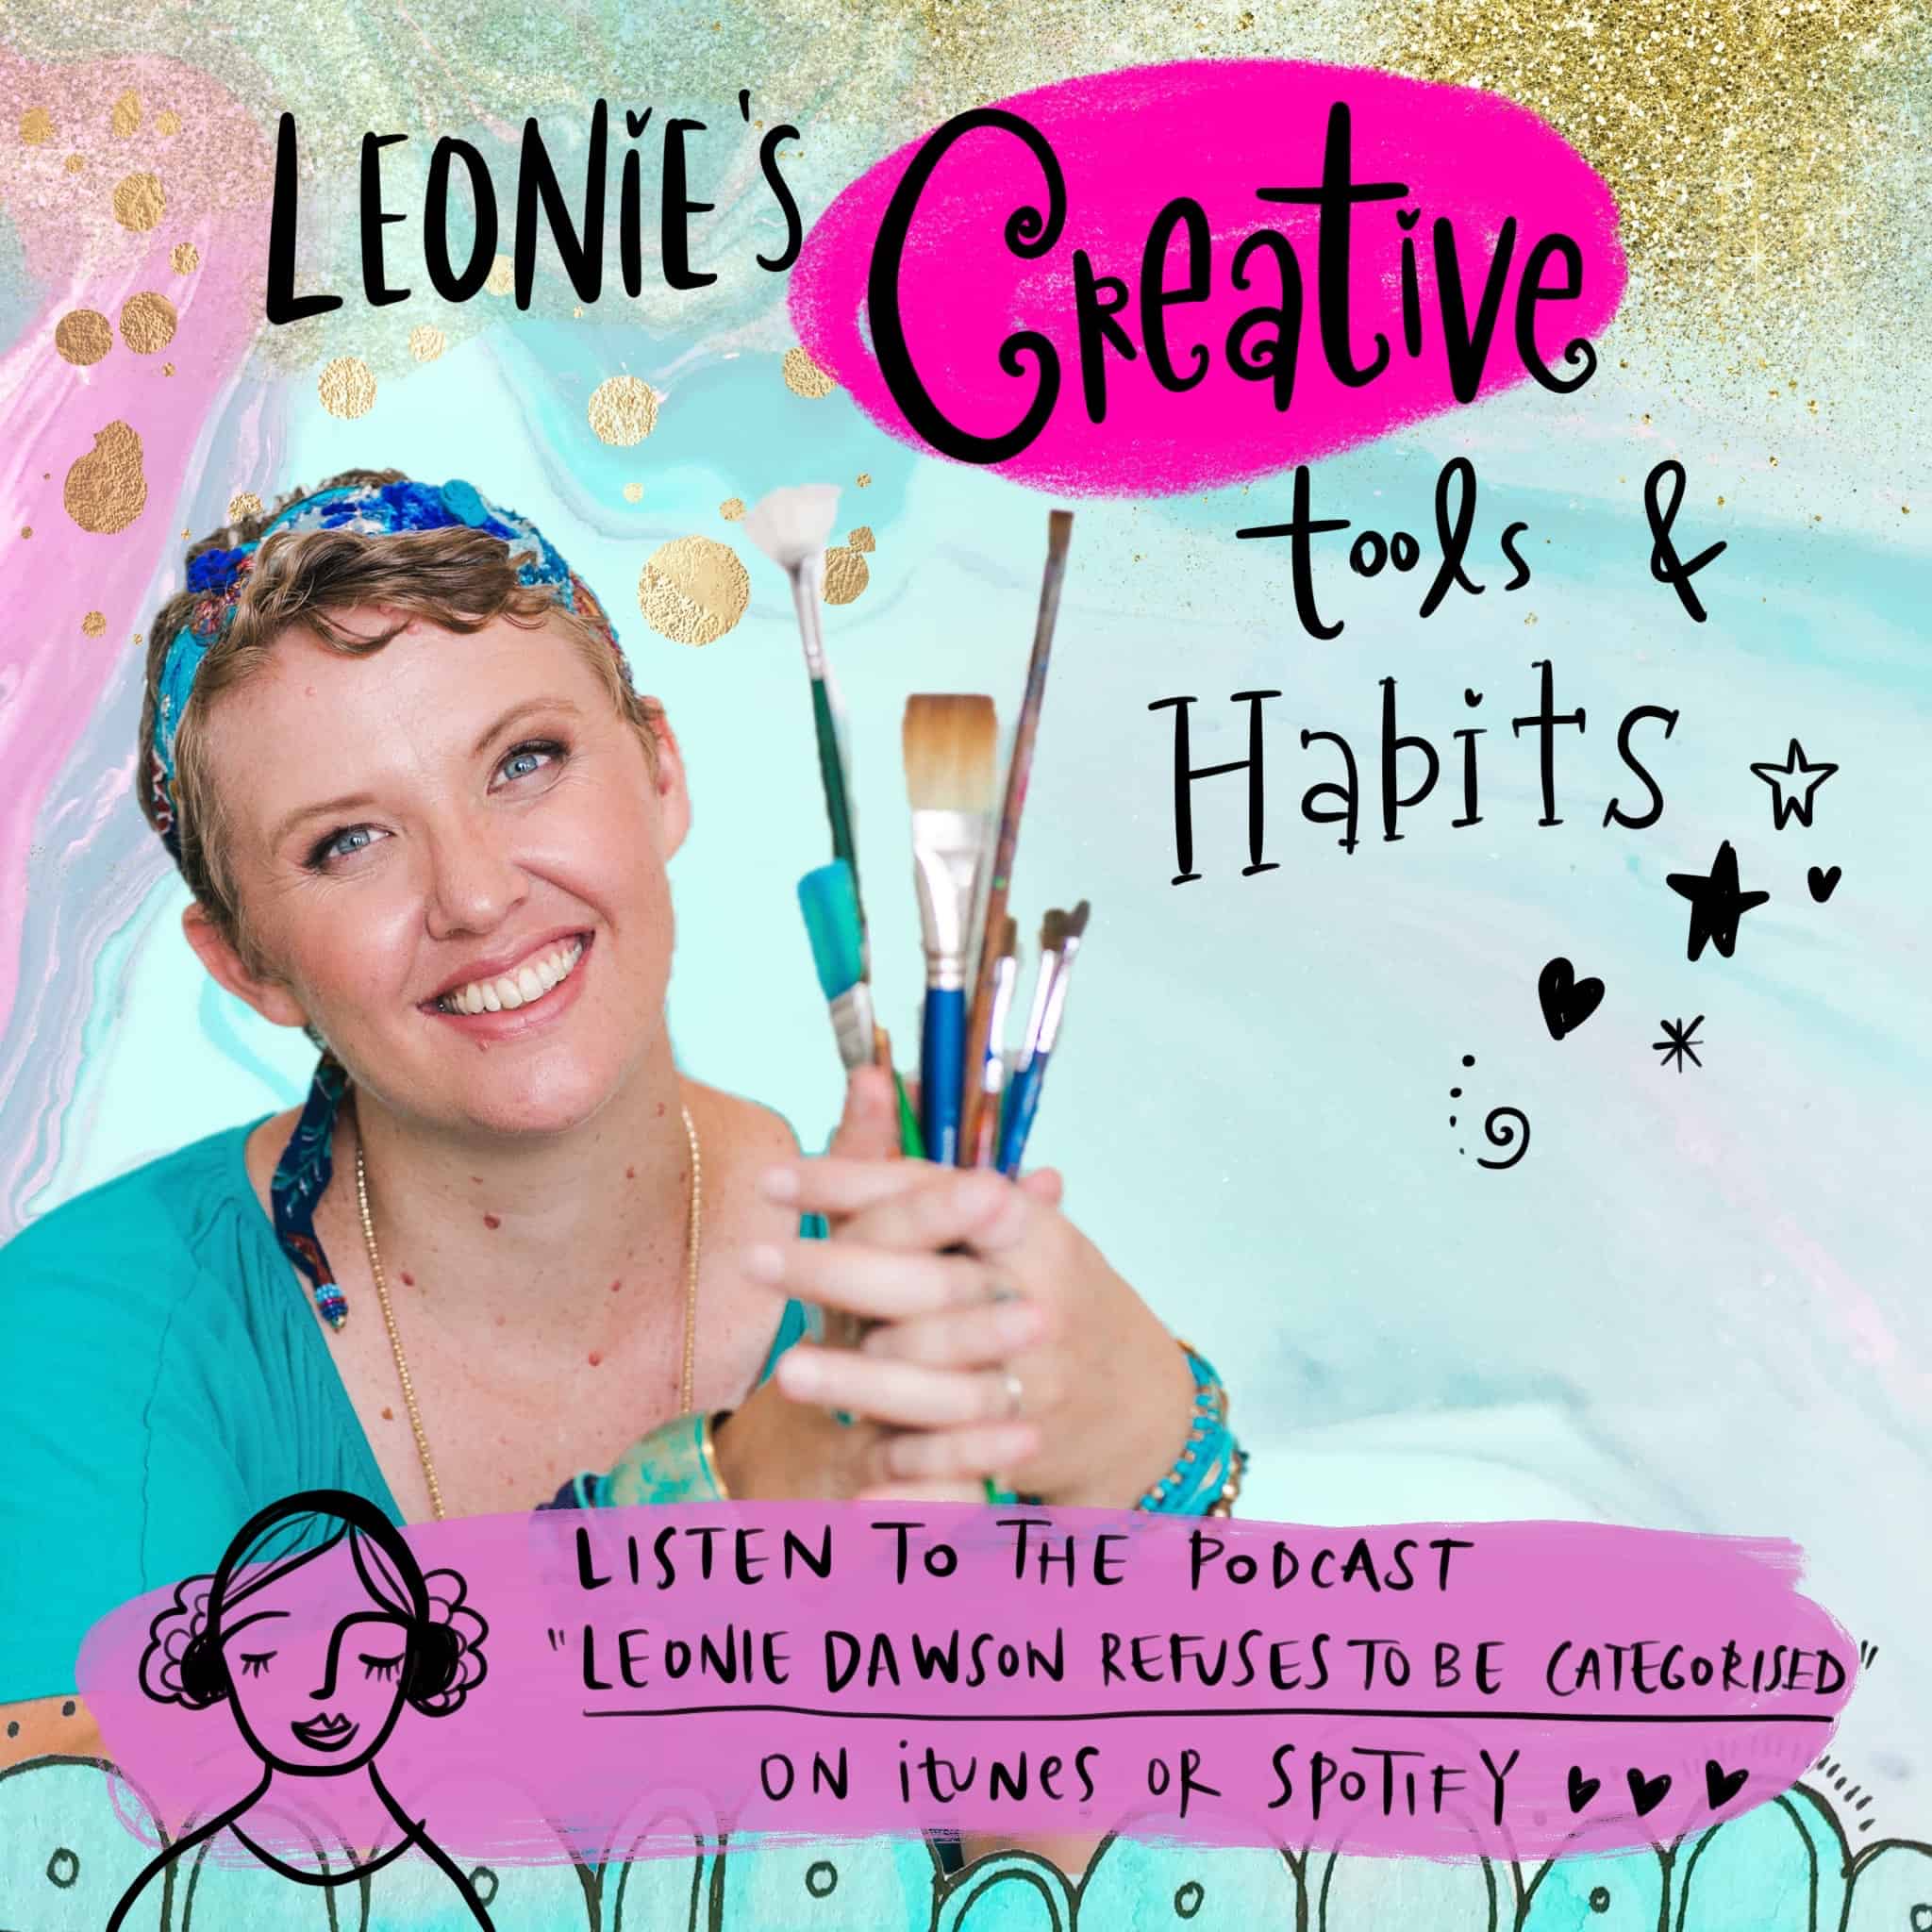 Podcast: Leonie's Creative Tools and Habits